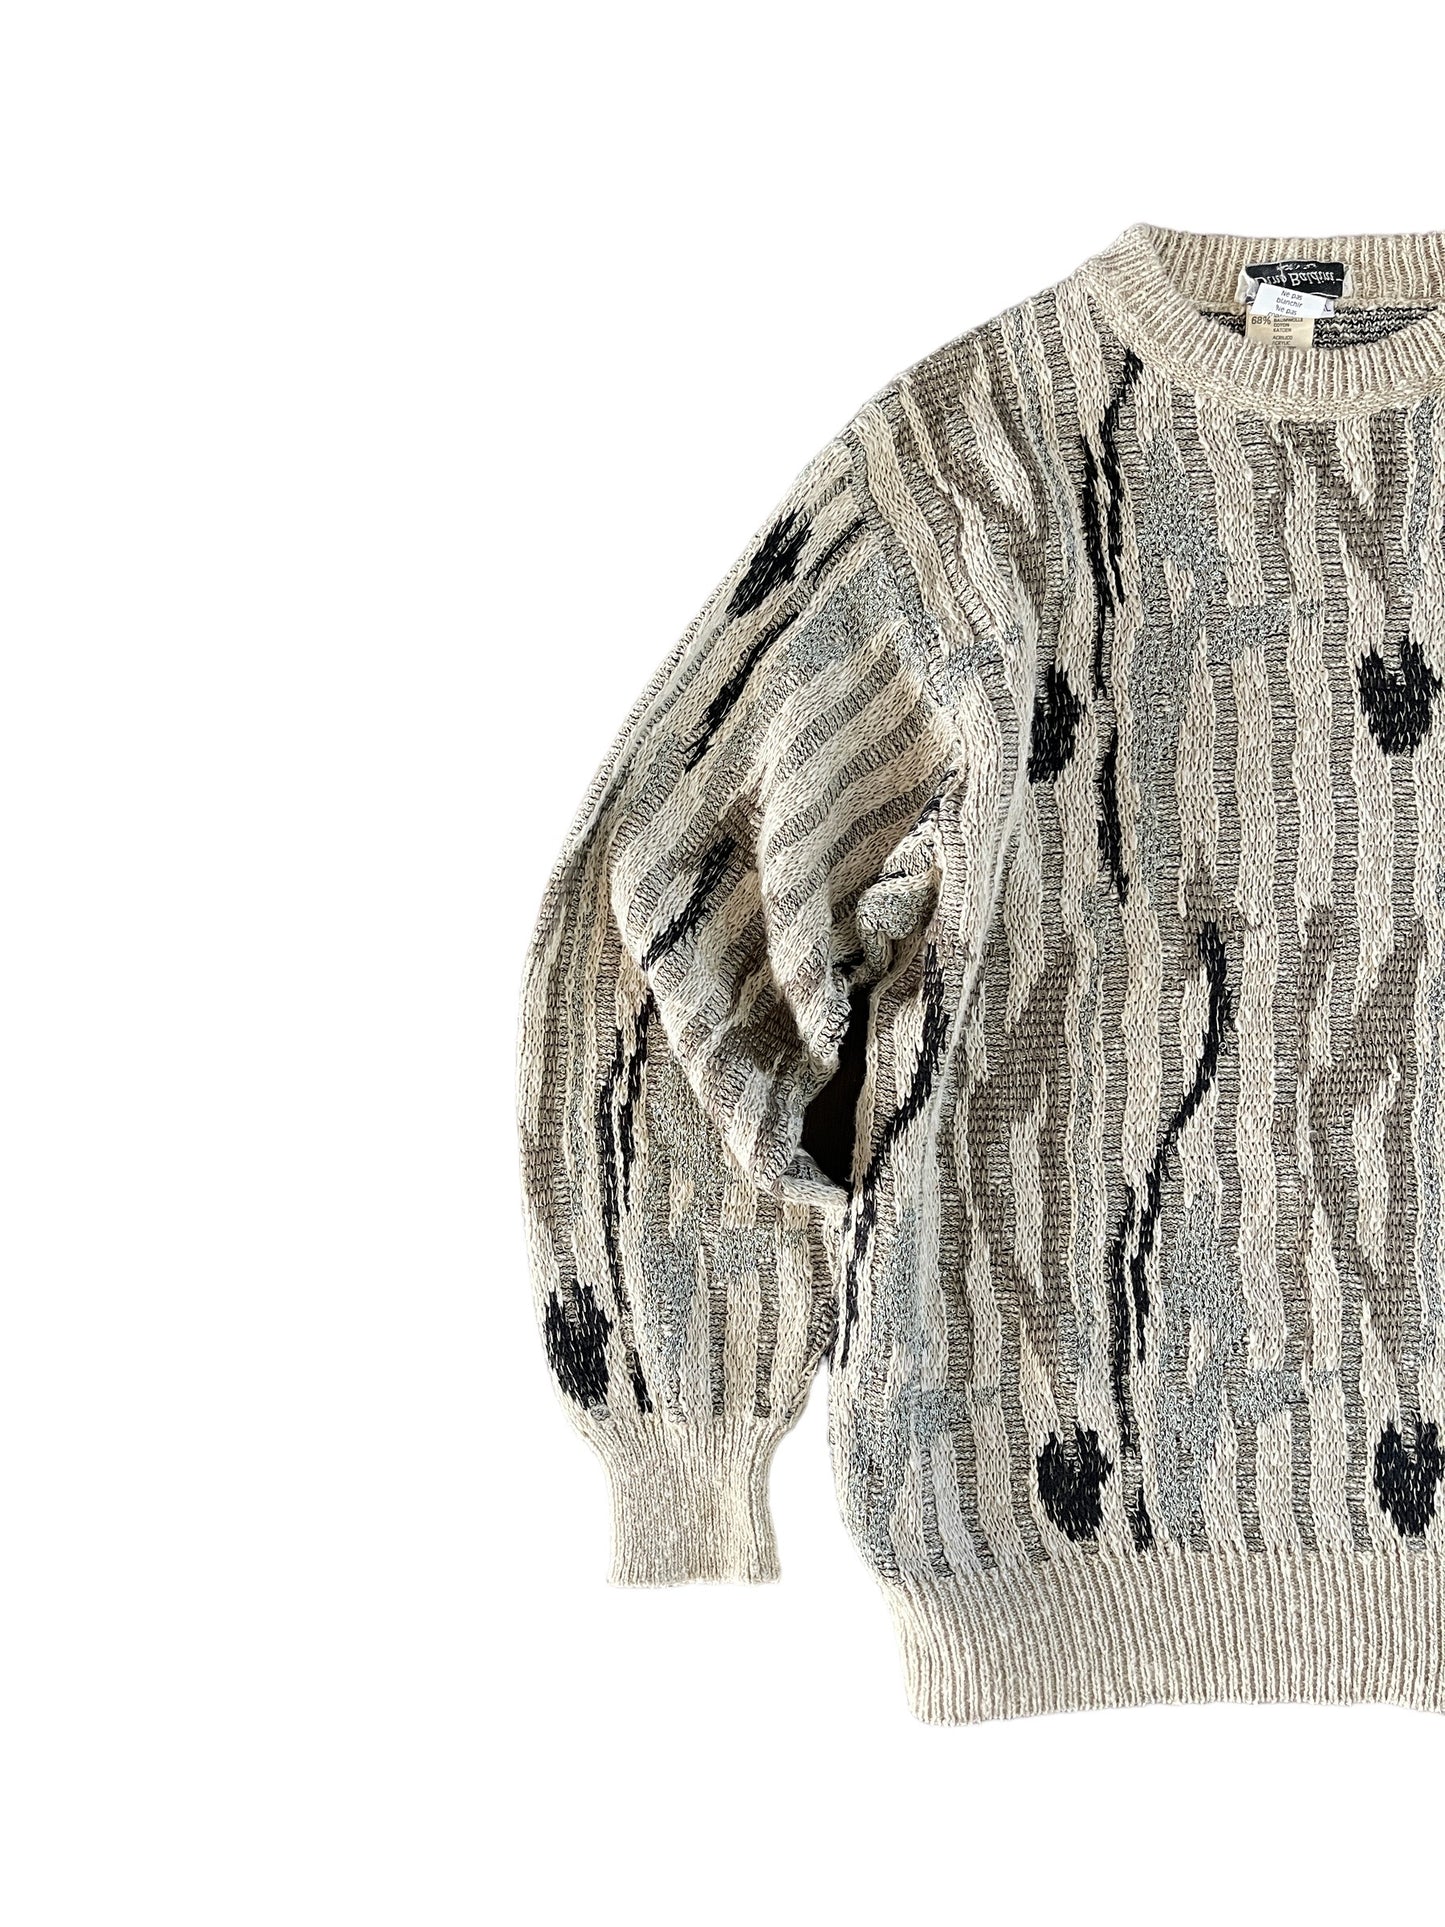 Vintage "Dino Baldini" Knit Sweater